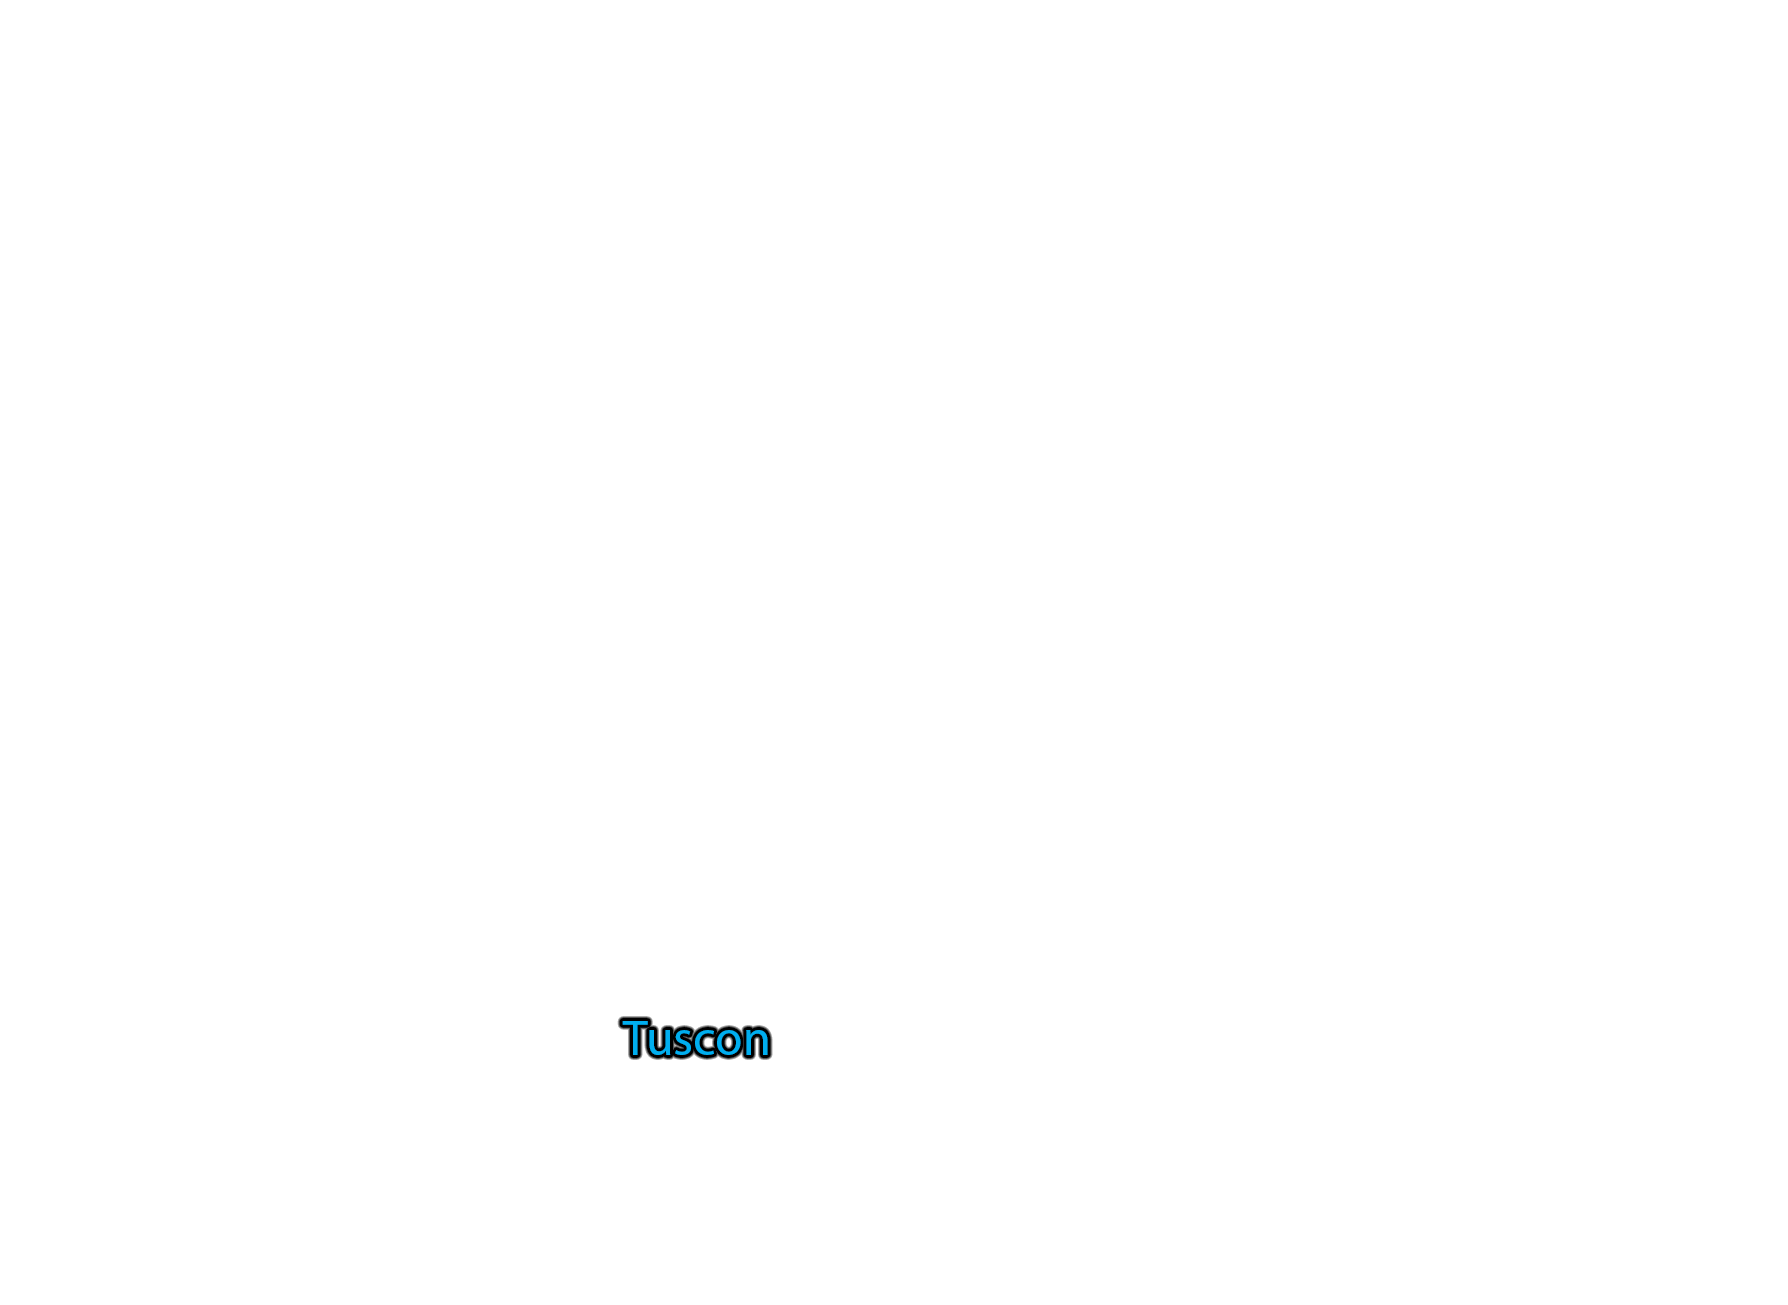 Tucson label with glow